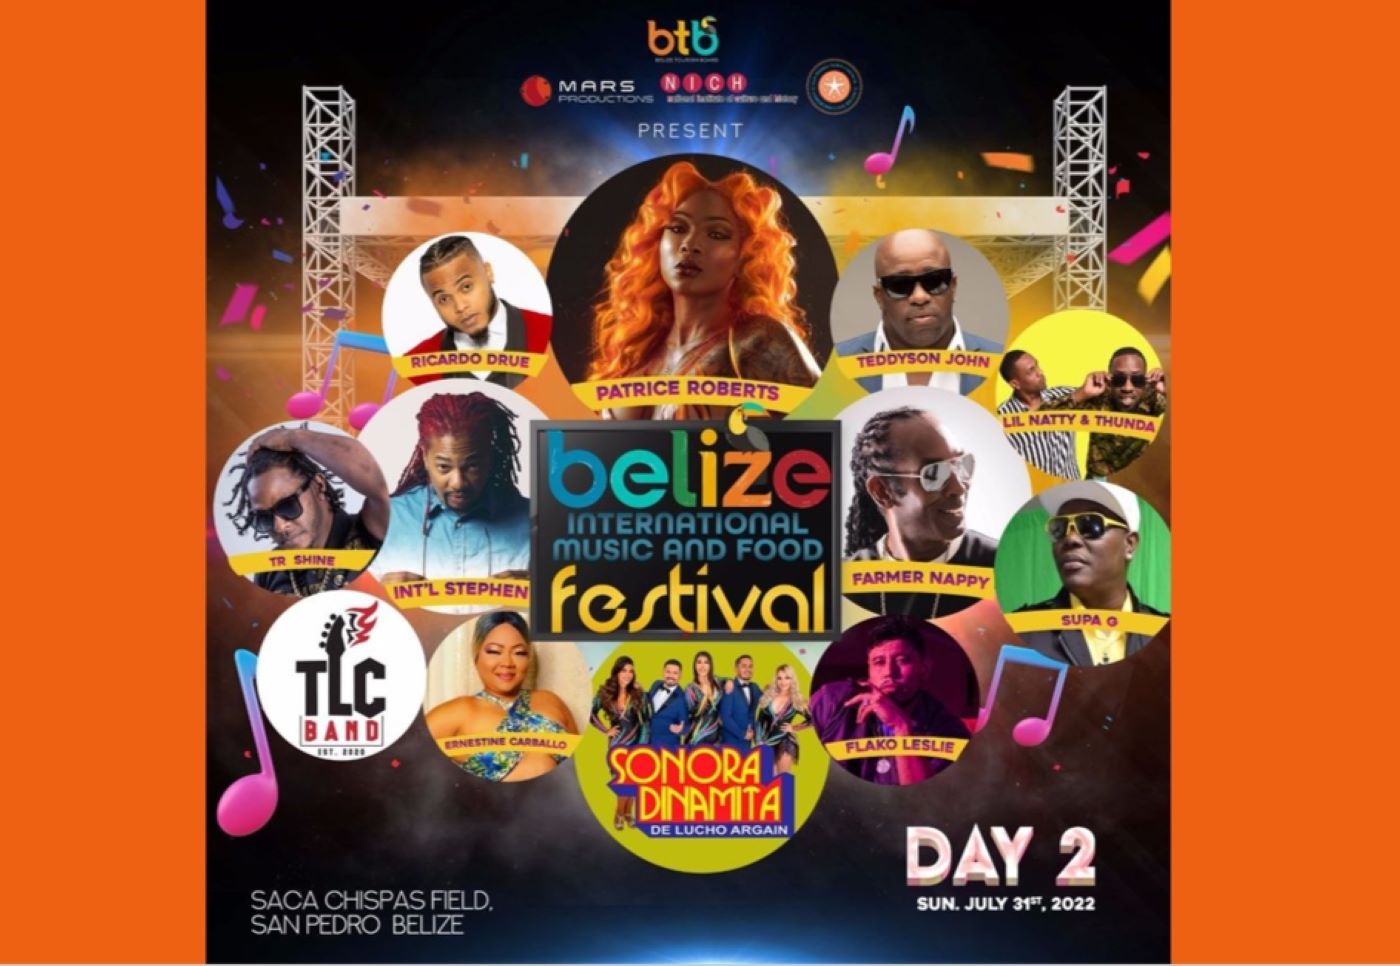 Belize International Music and Food festival kicks off tomorrow